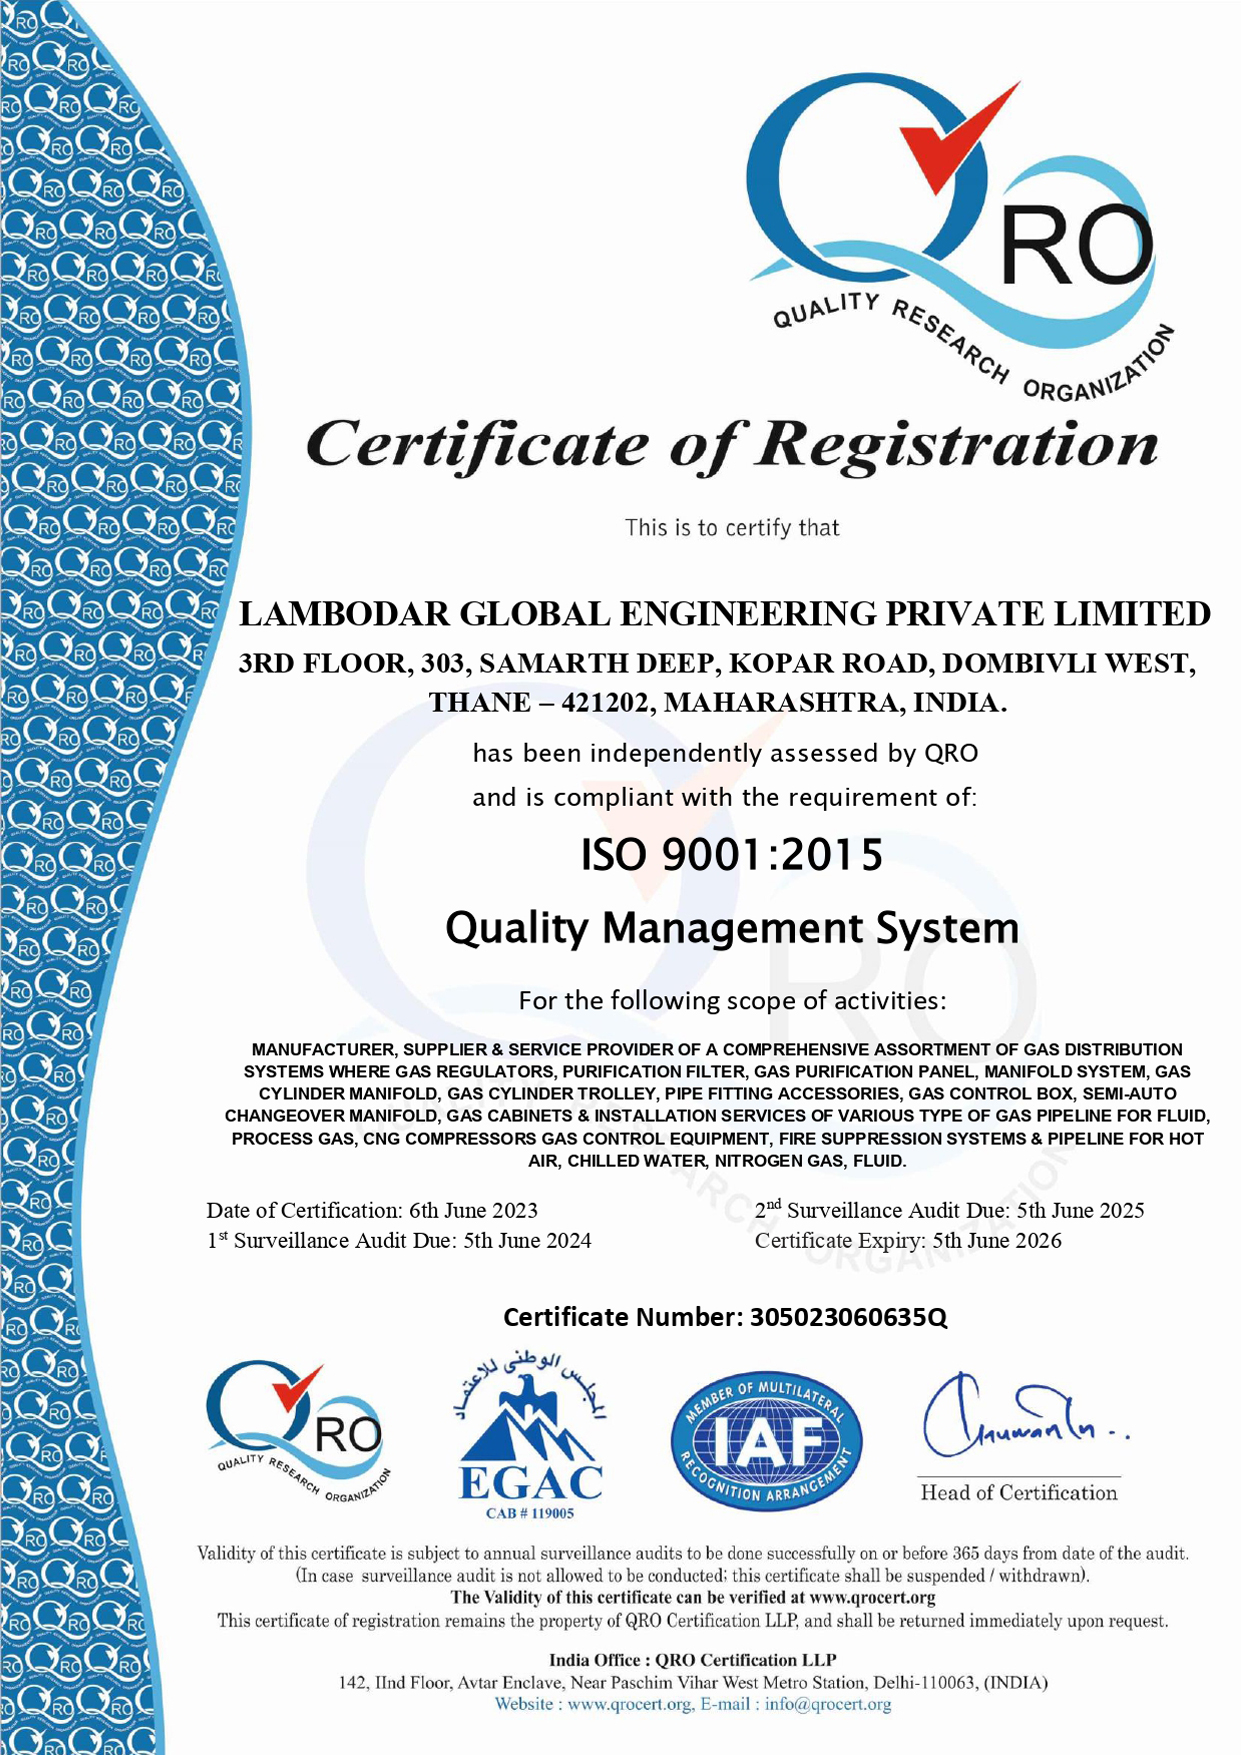 ISO 90012015 Certificte